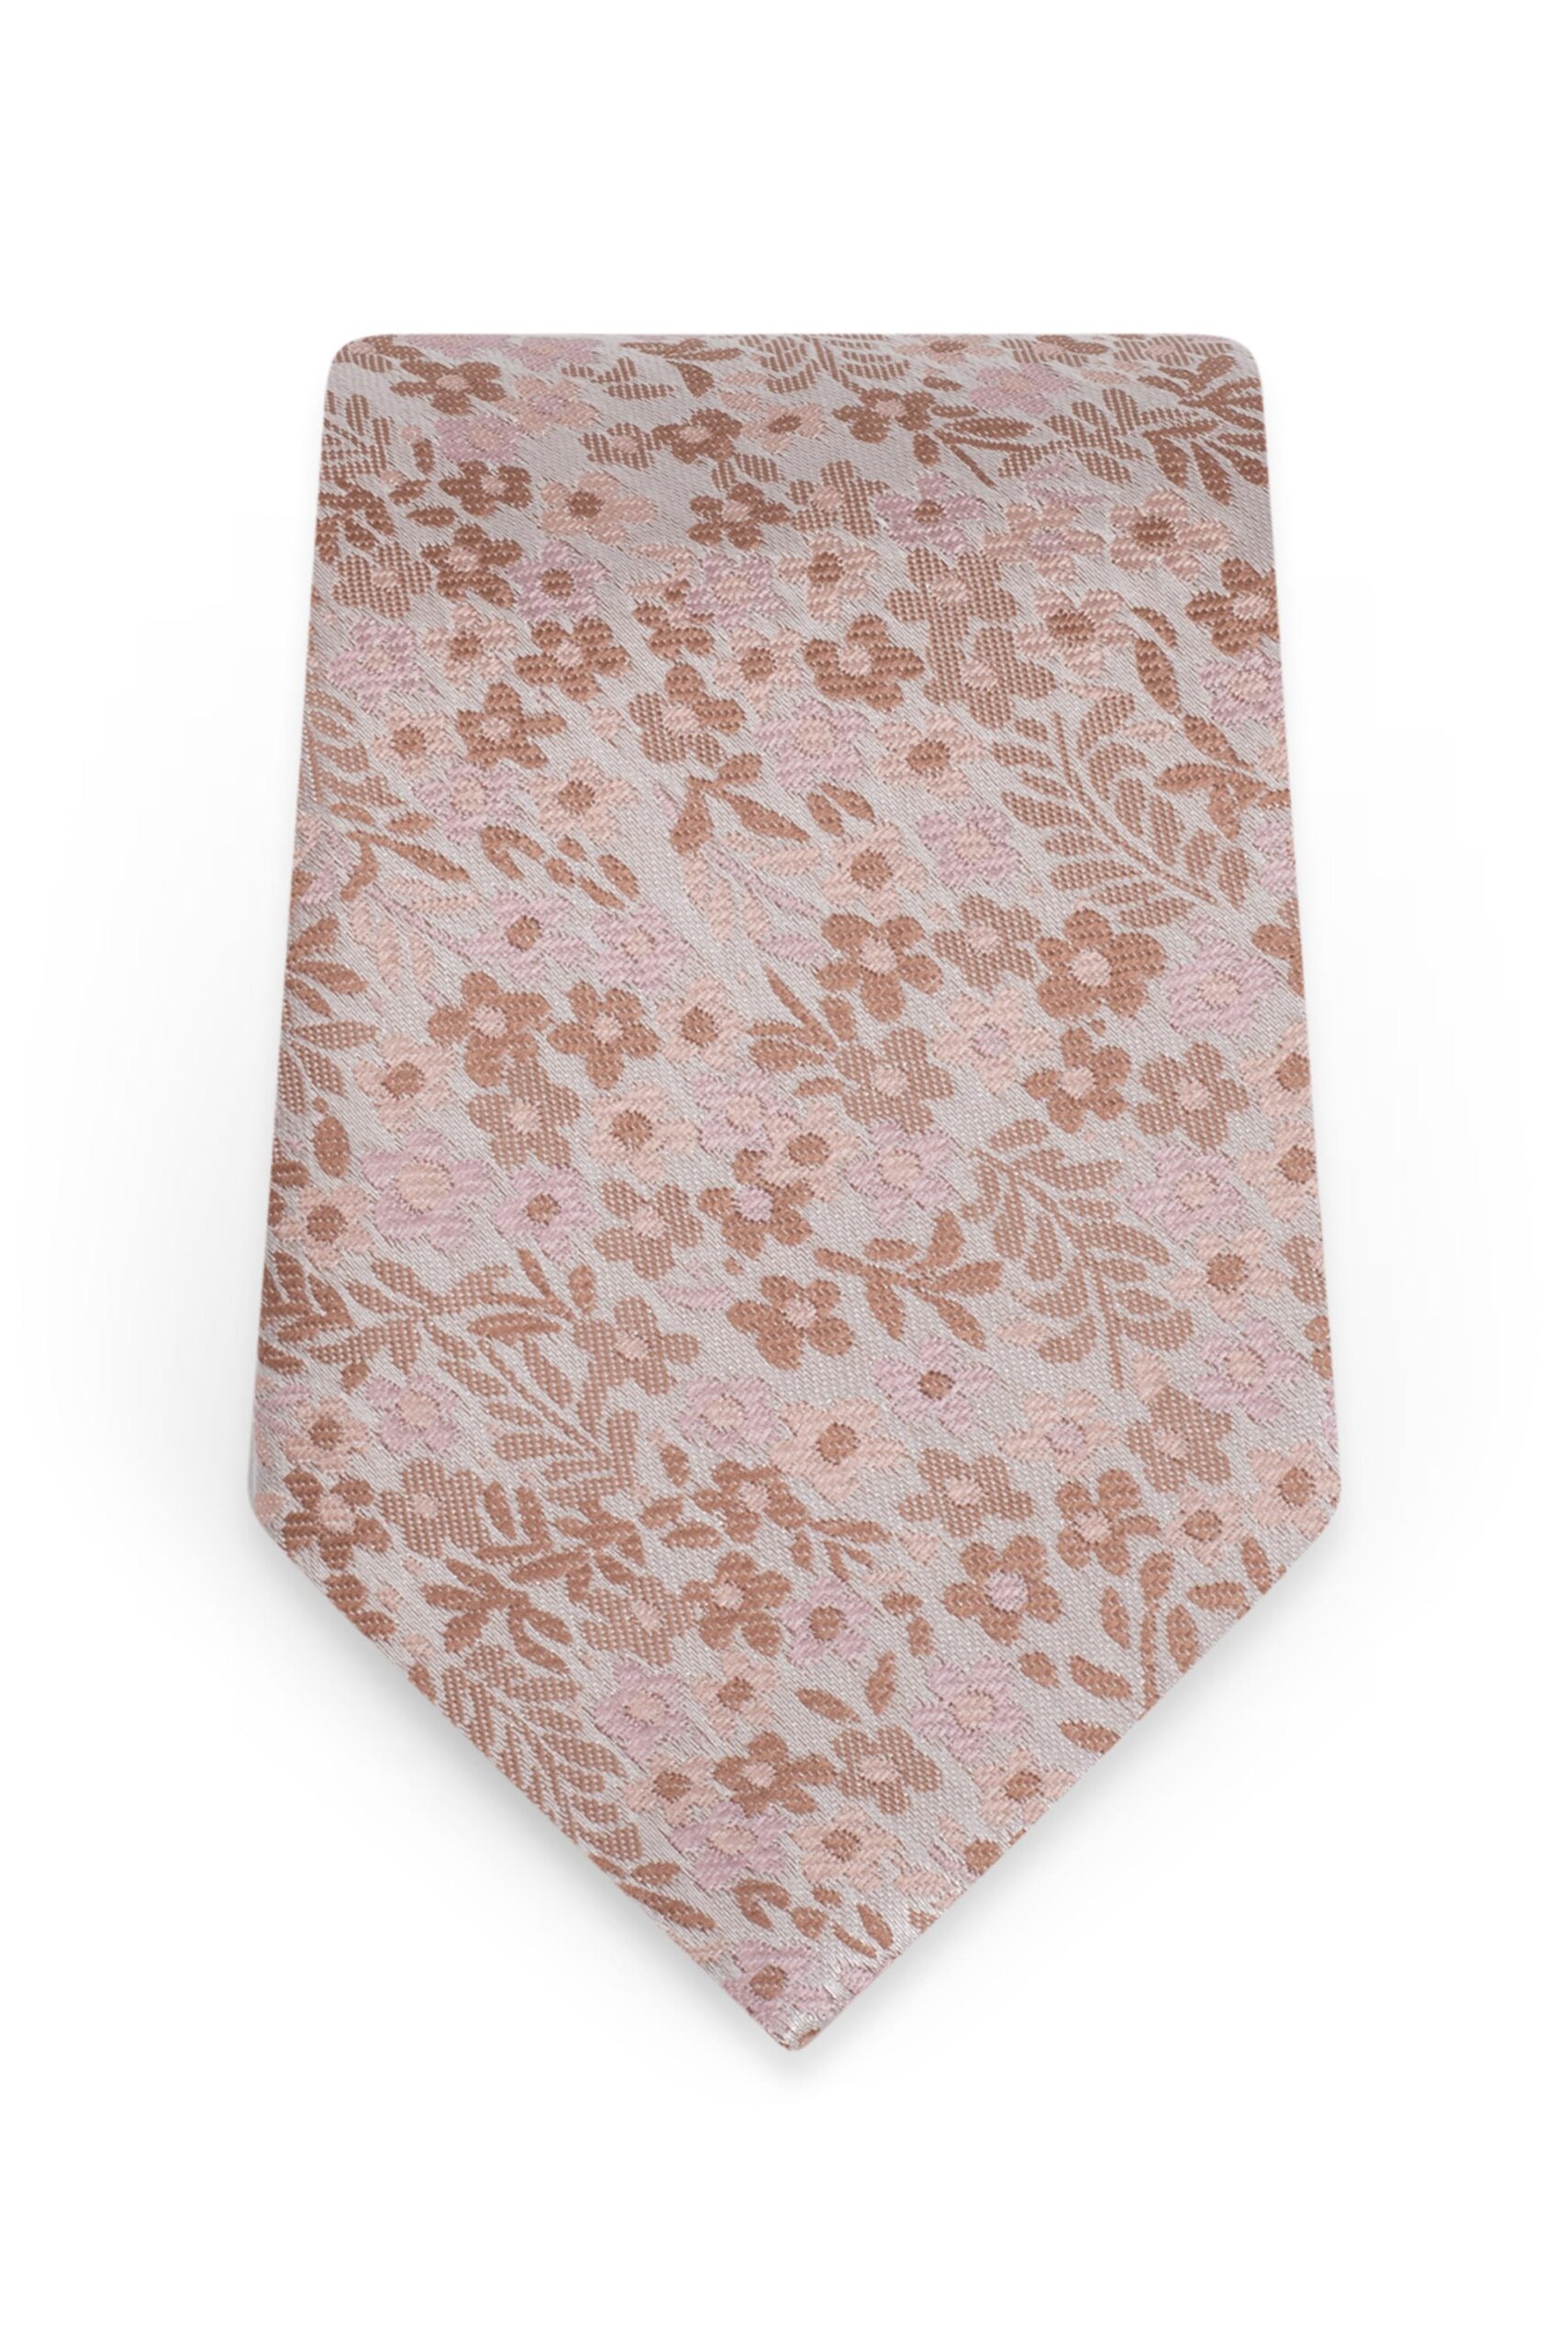 Floral Rose Gold Self-Tie Windsor Tie 1